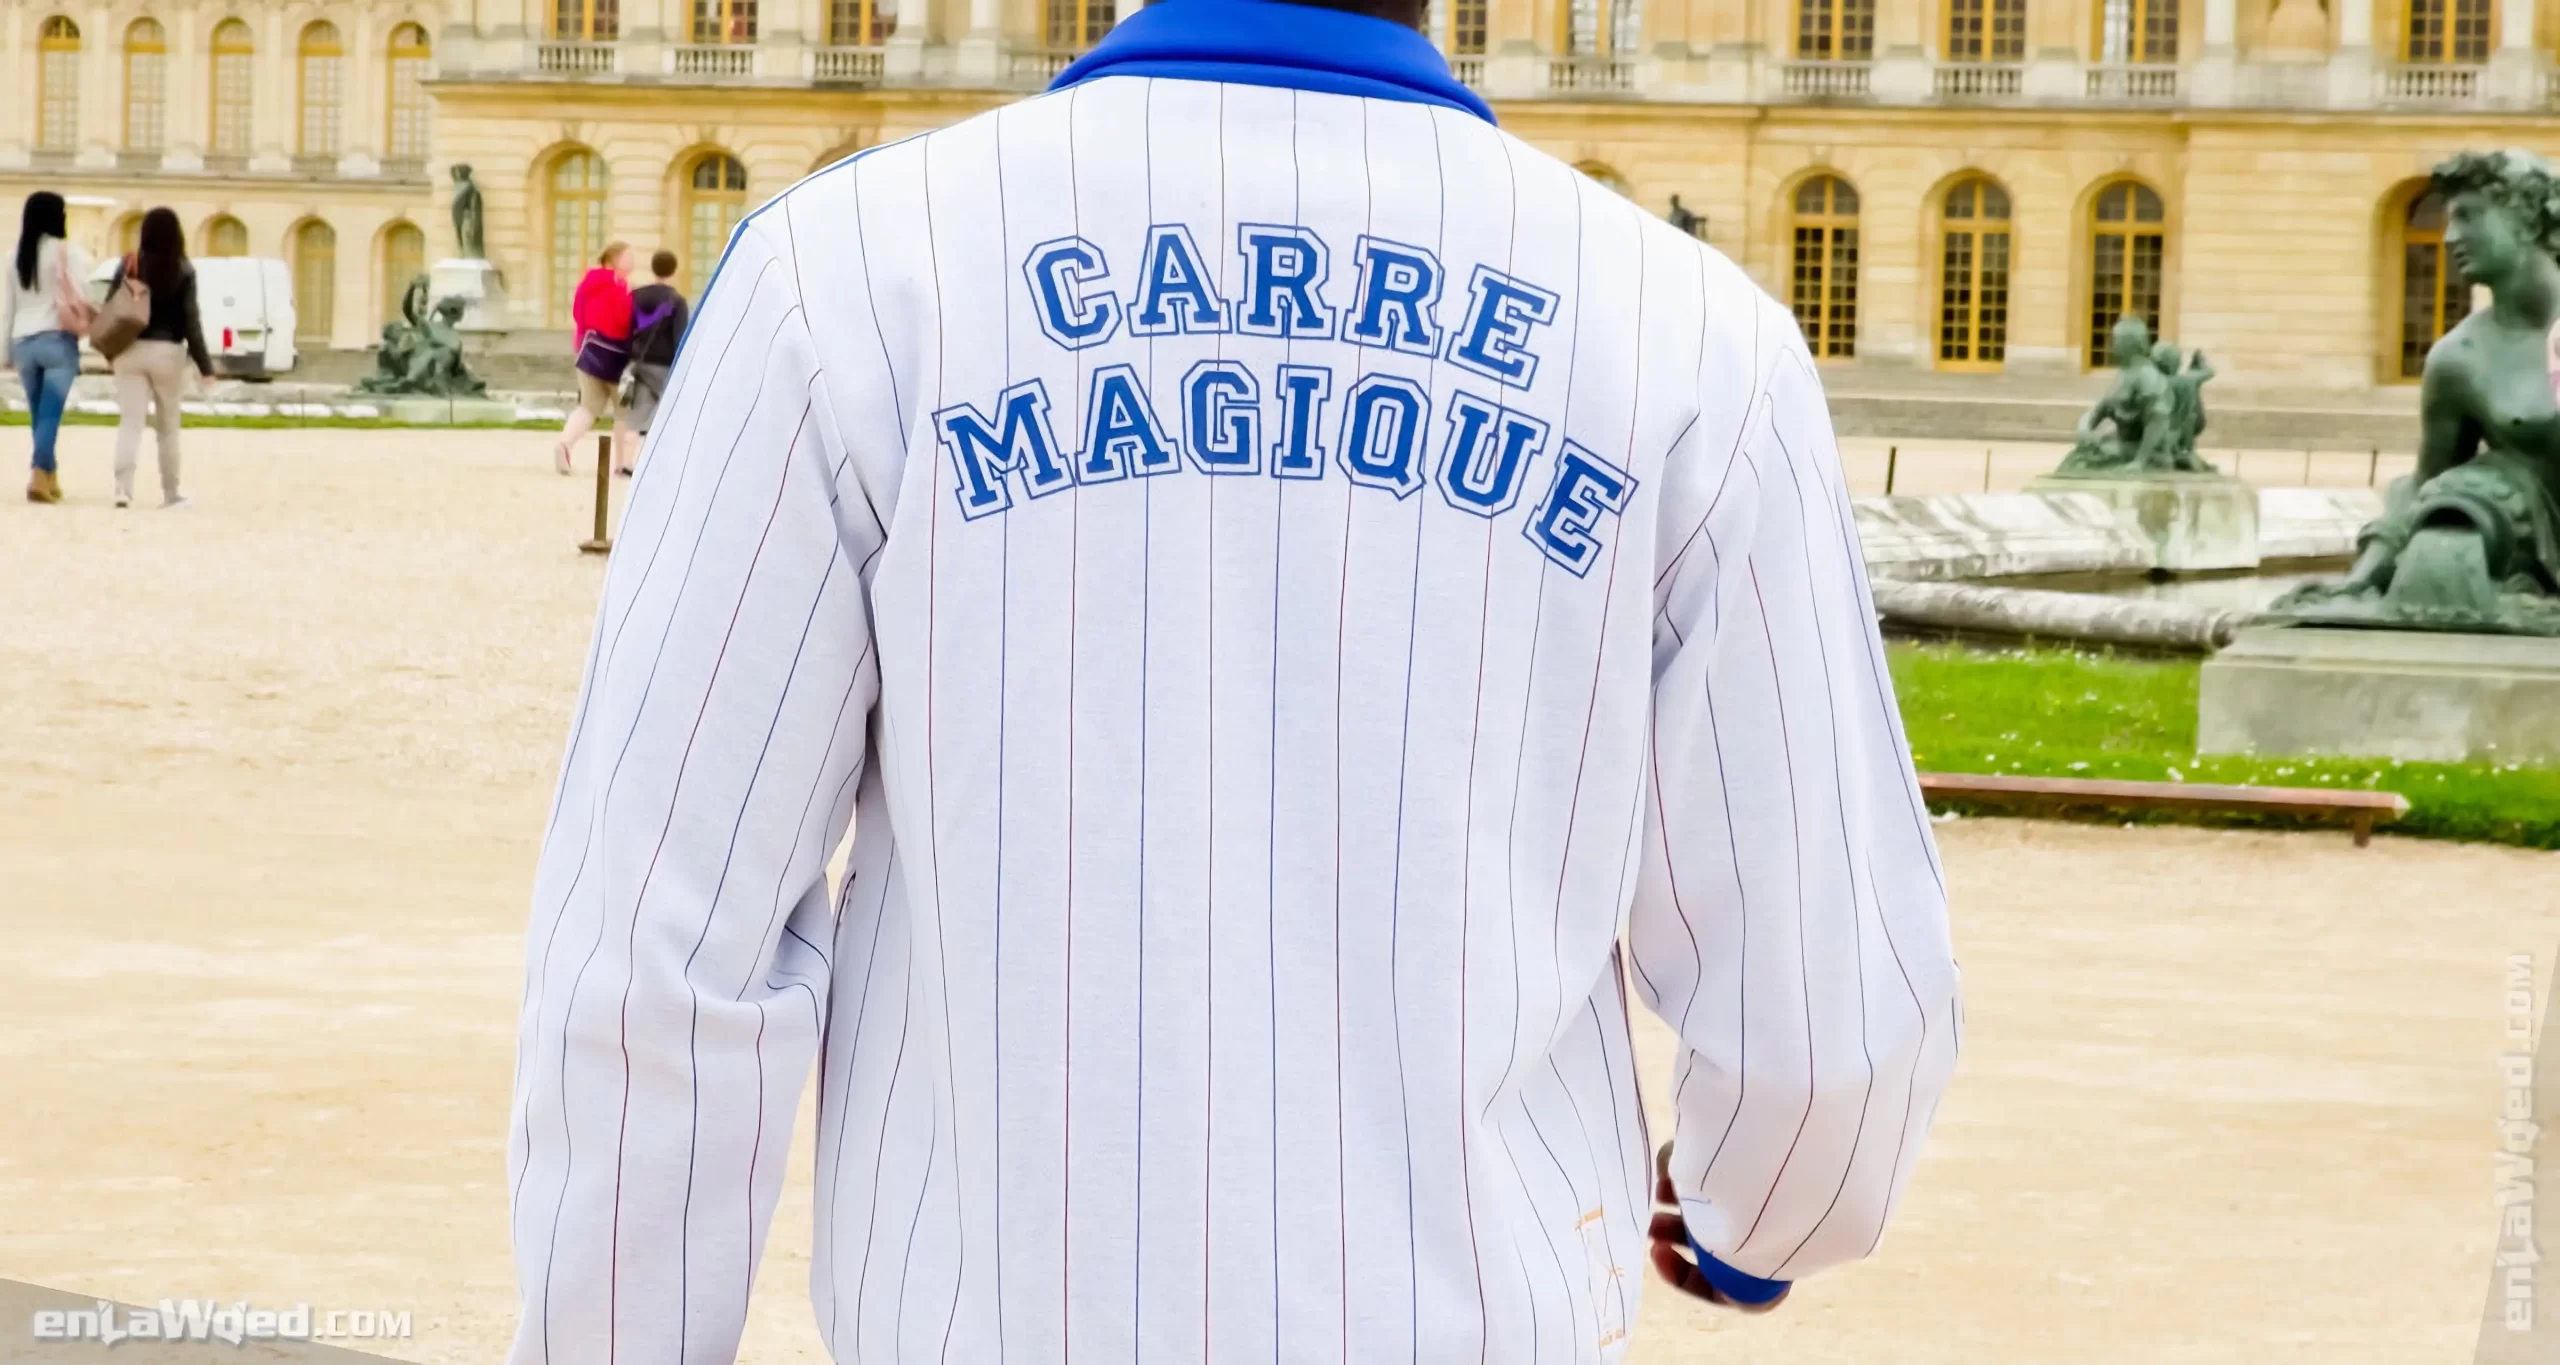 Men’s 2006 France ’82 Carre Magique TT by Adidas: Spectacular (EnLawded.com file #lmchk90381ip2y122344kg9st)